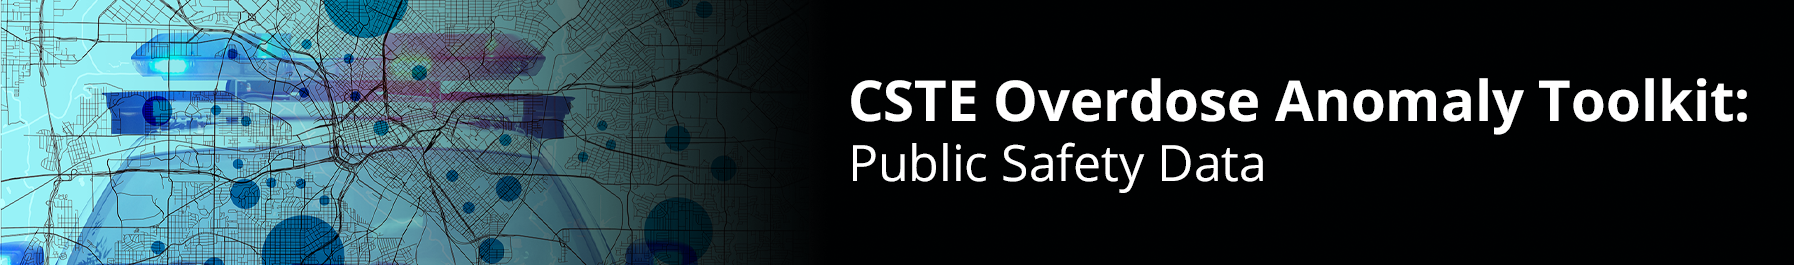 CSTE Overdose Anomaly Toolkit: Public Safety